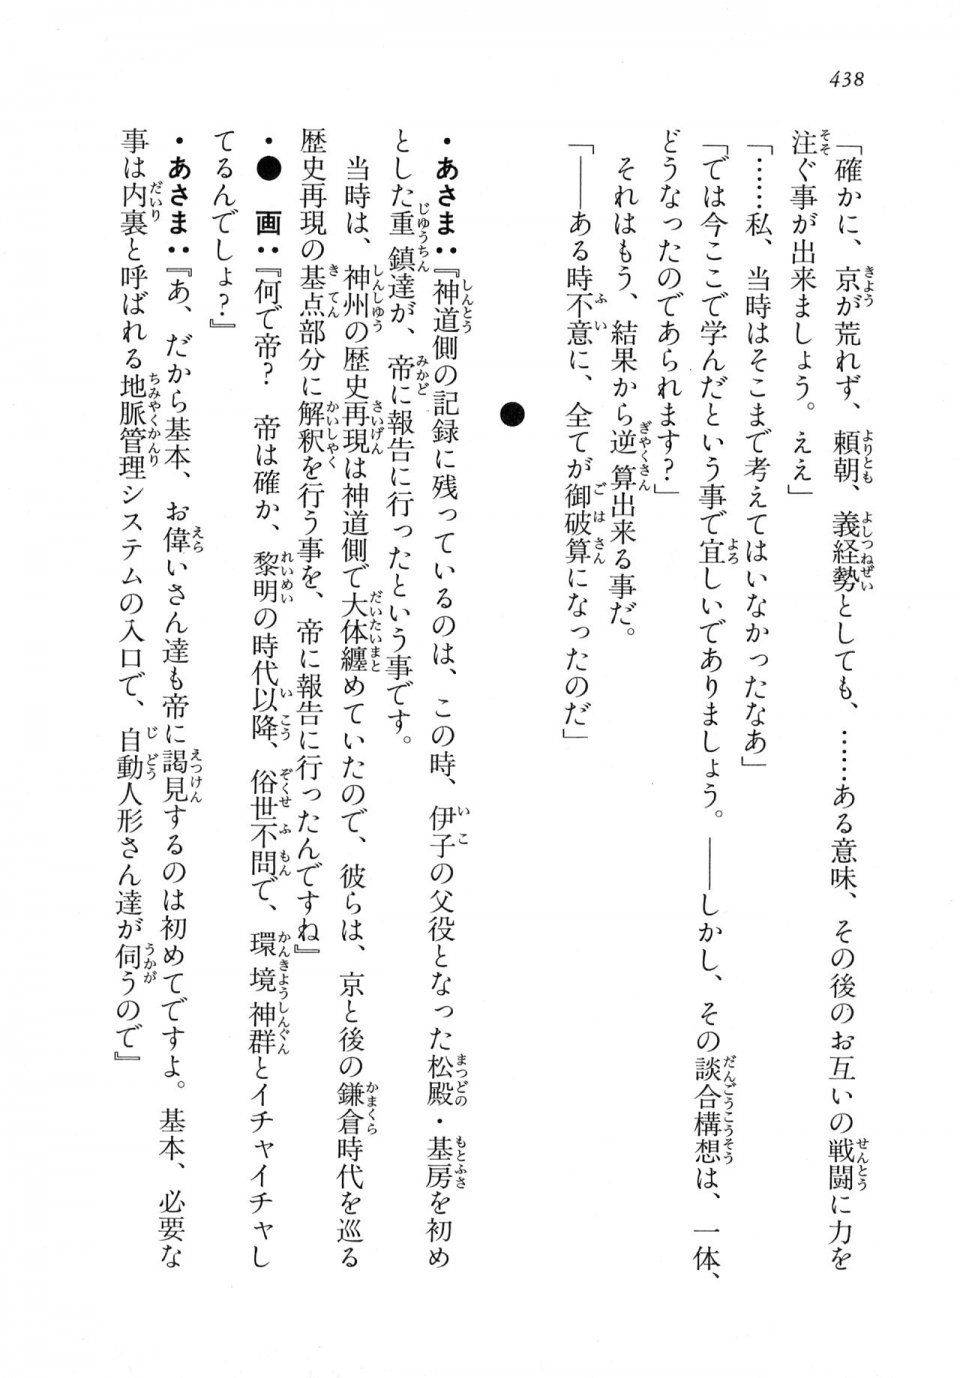 Kyoukai Senjou no Horizon LN Vol 18(7C) Part 1 - Photo #438